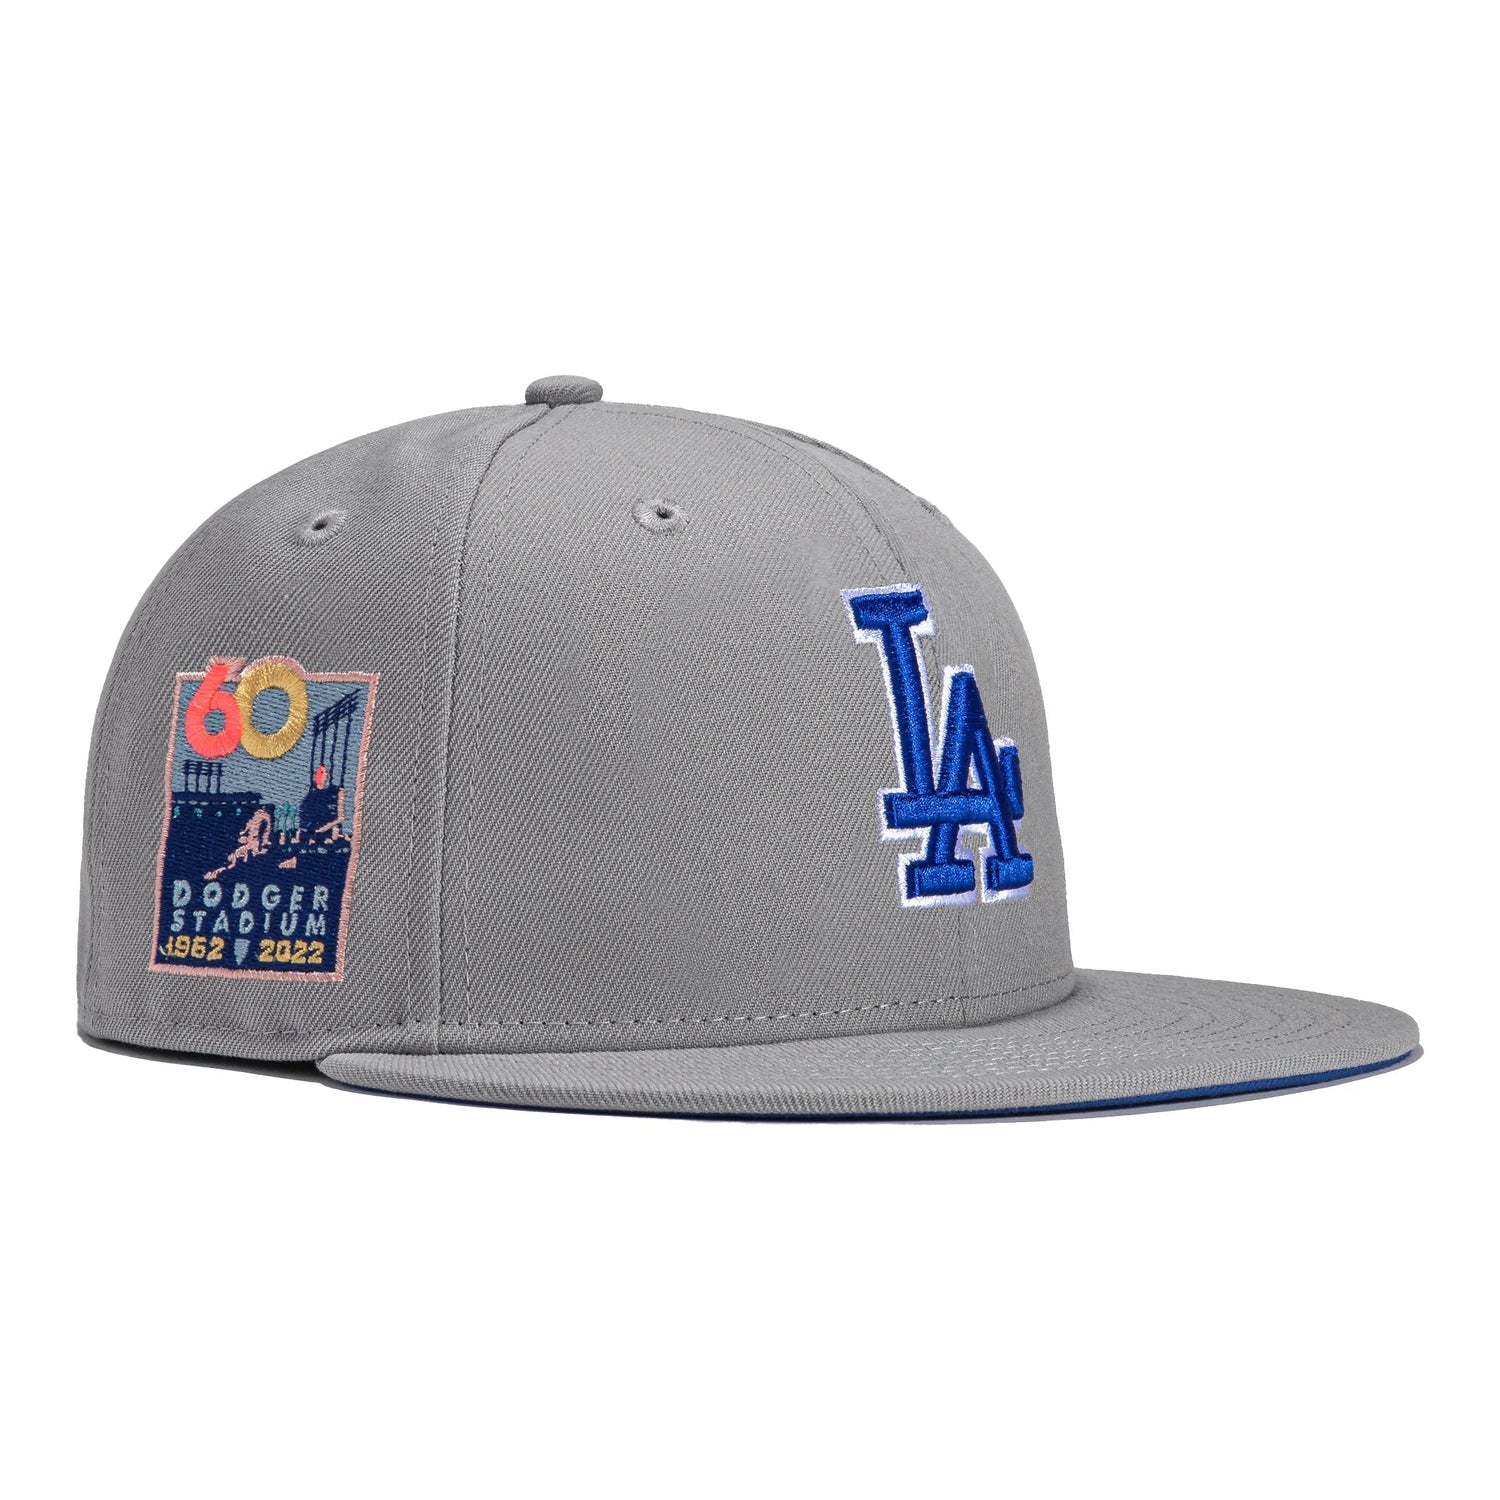 New era MLB The League Los Angeles Dodgers OTC Cap Blue